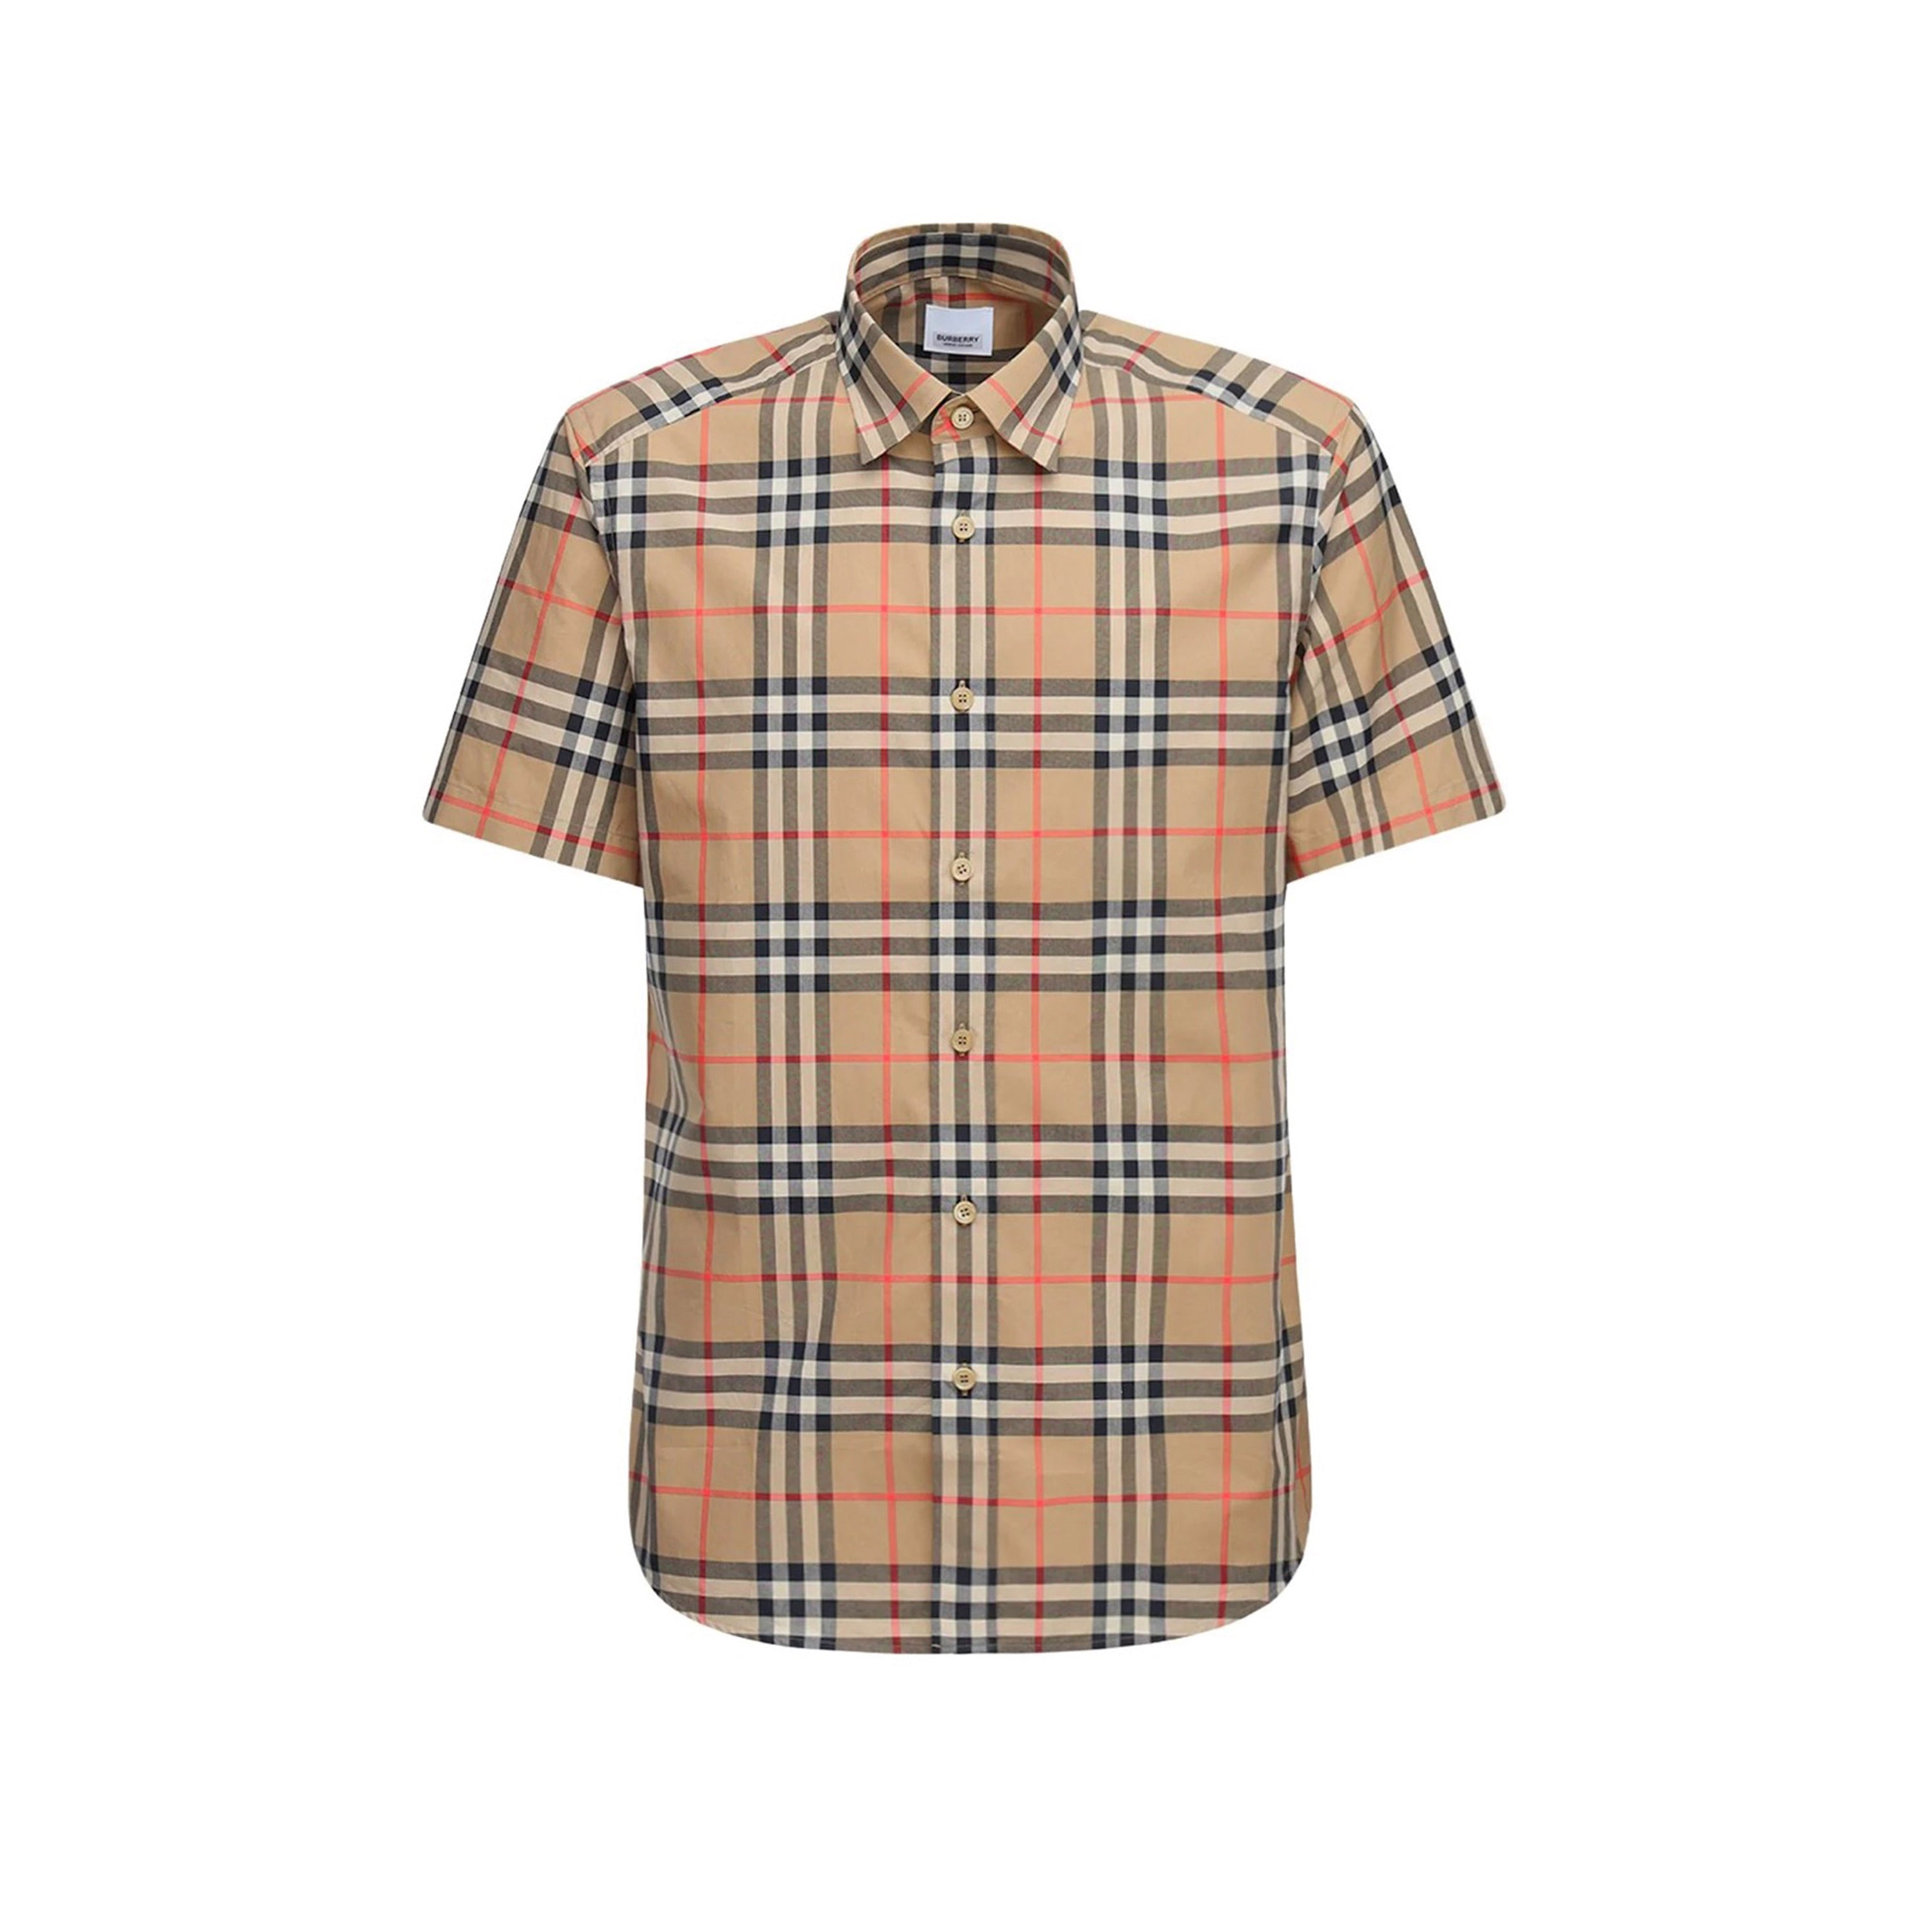 Burberry - Caxton Check Shirt